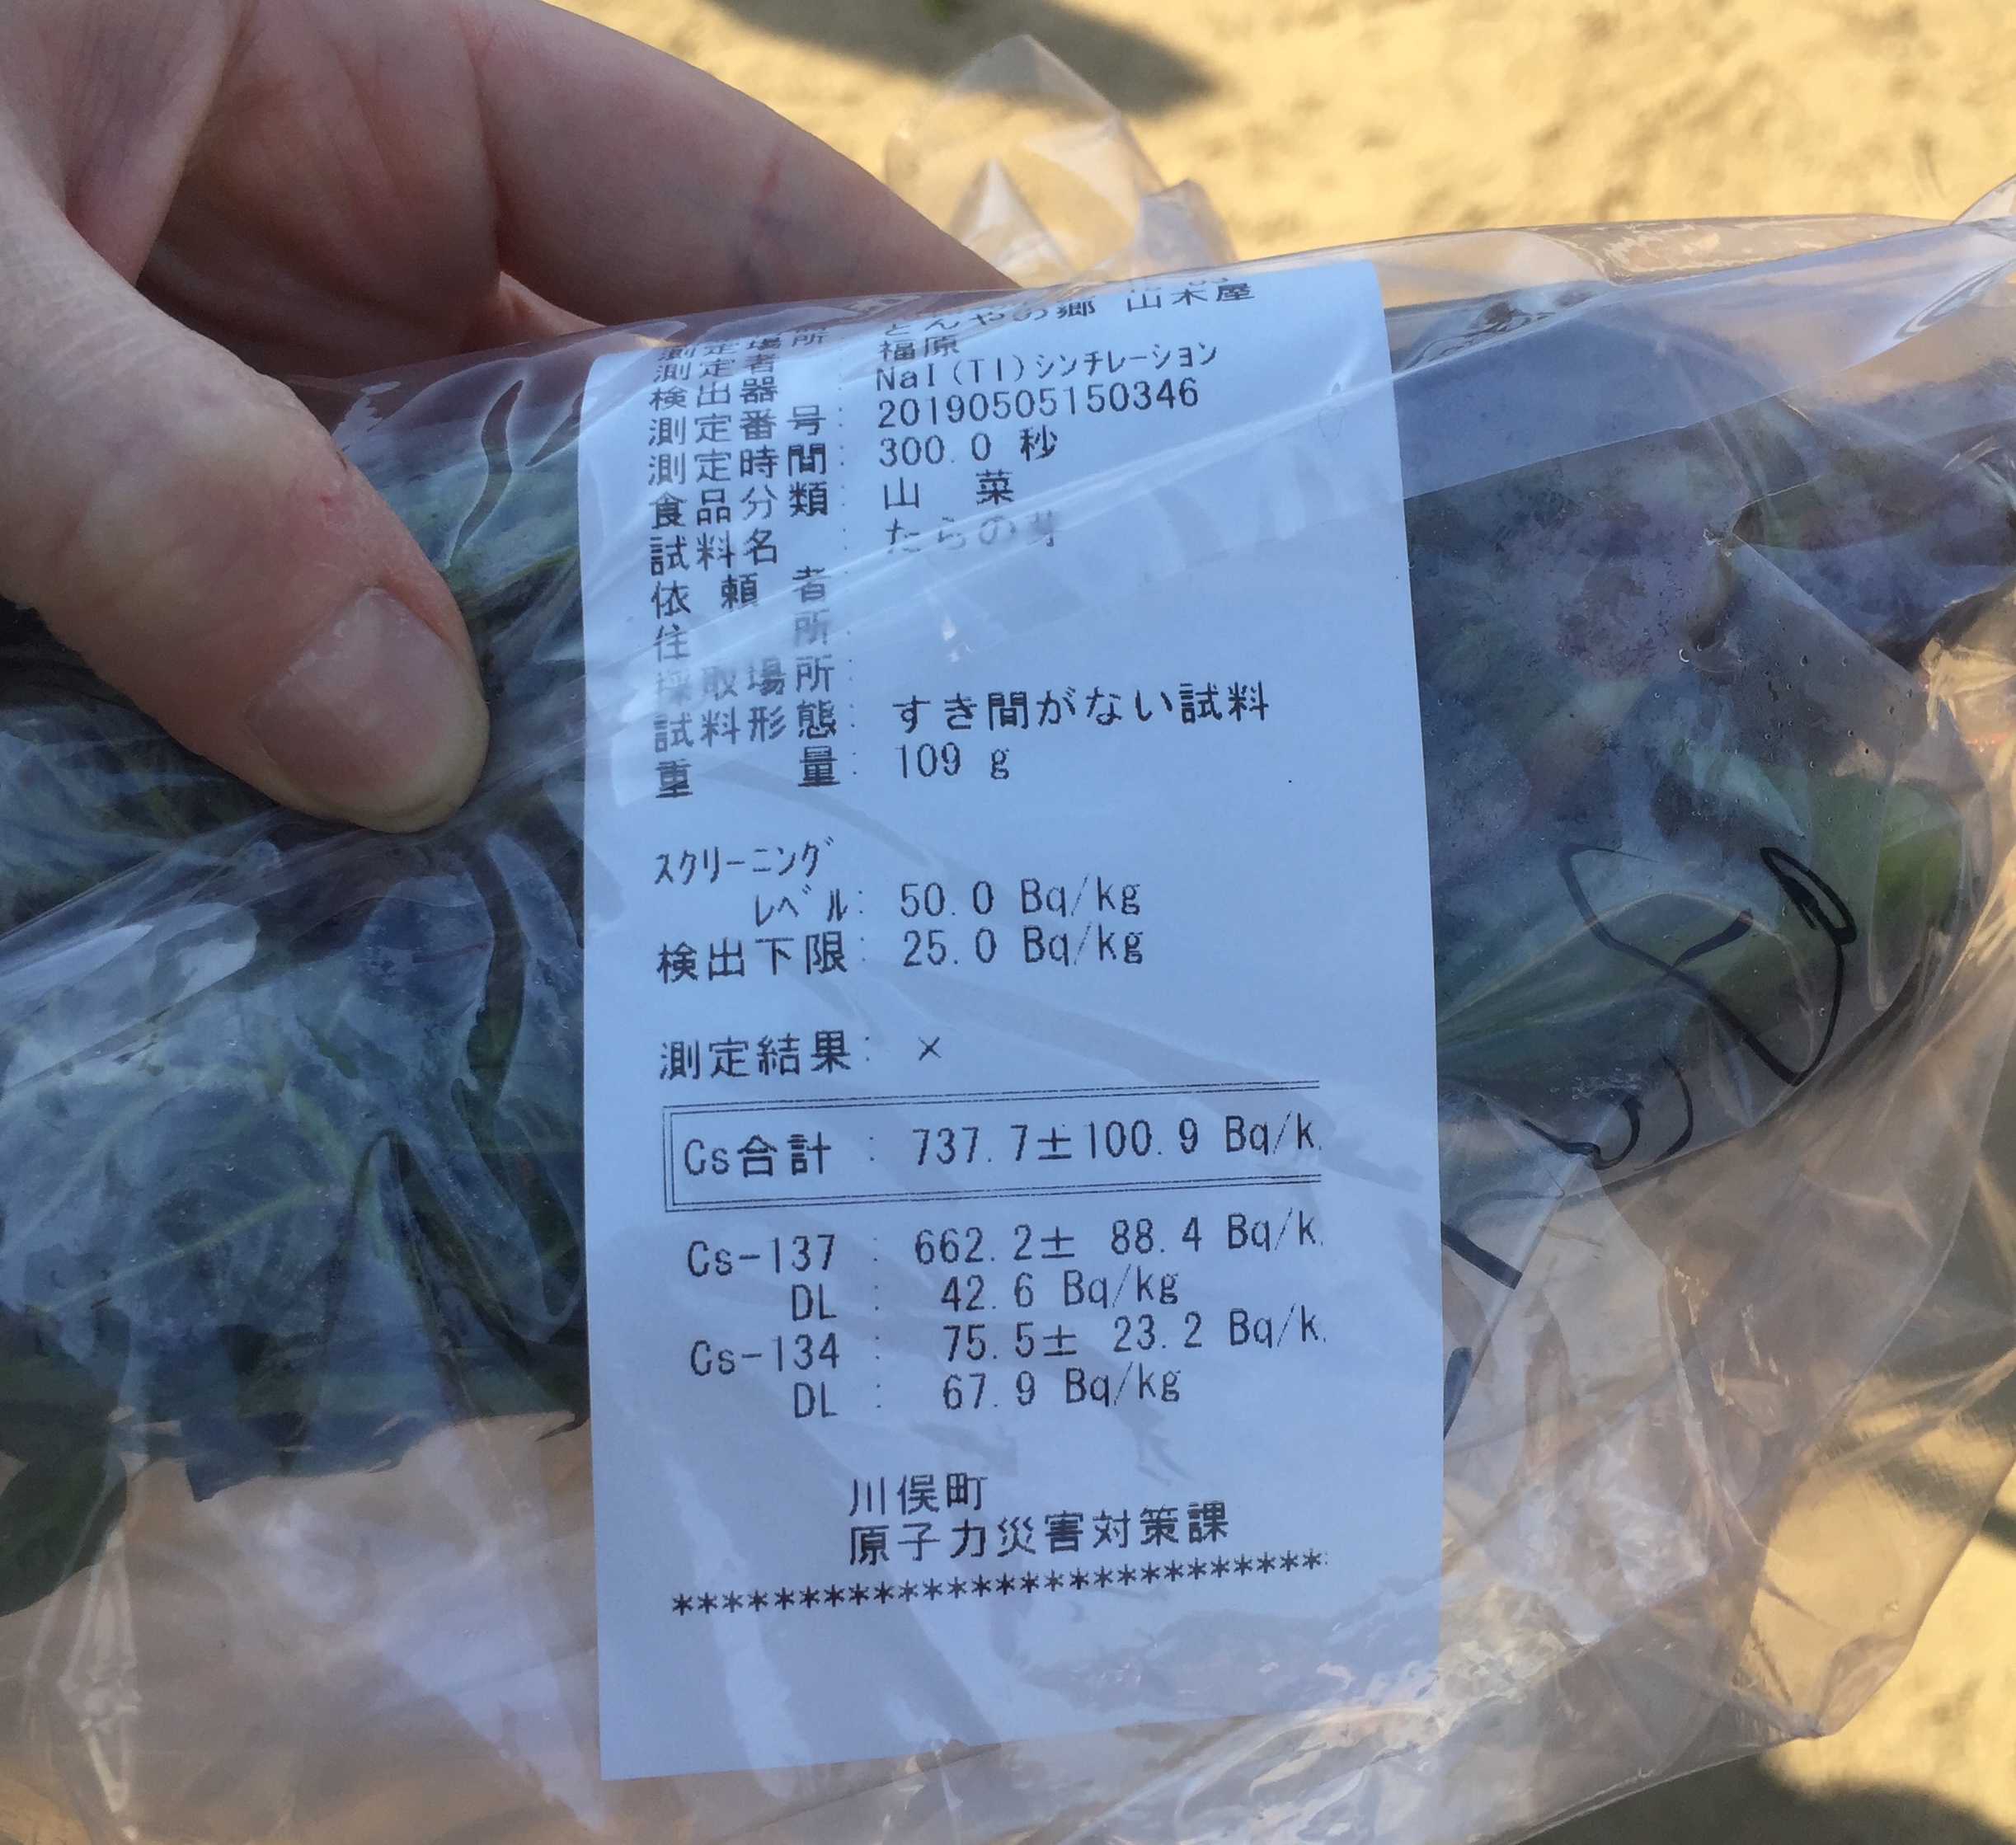 A bag of wild vegetables